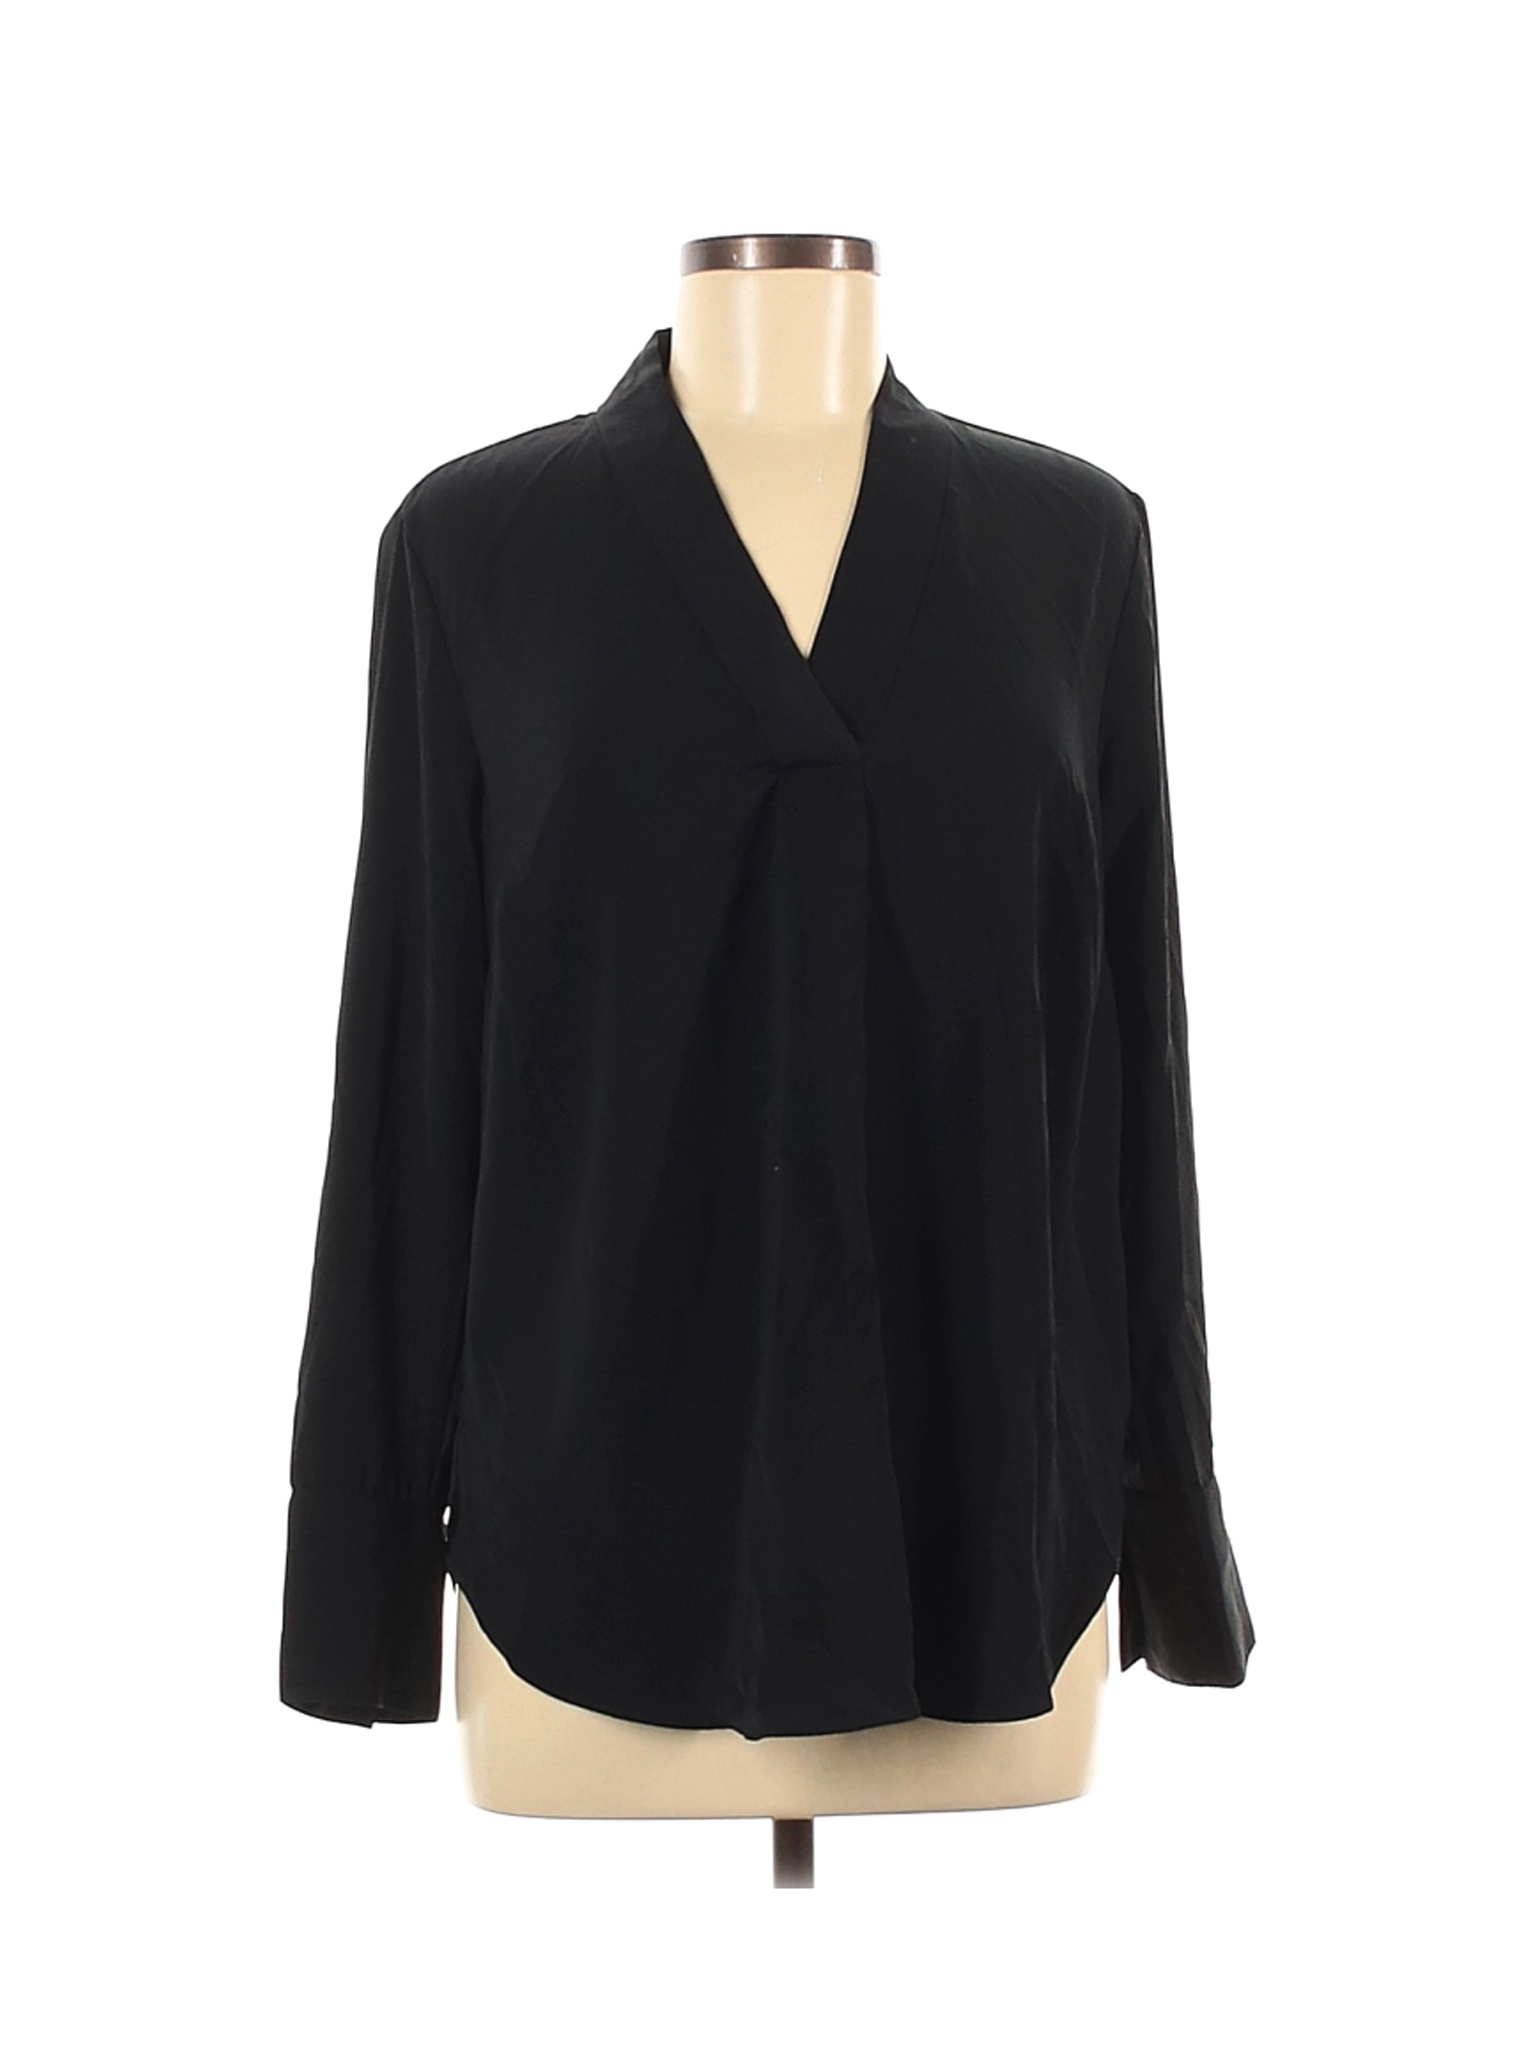 H&M Women Black Long Sleeve Blouse 12 | eBay